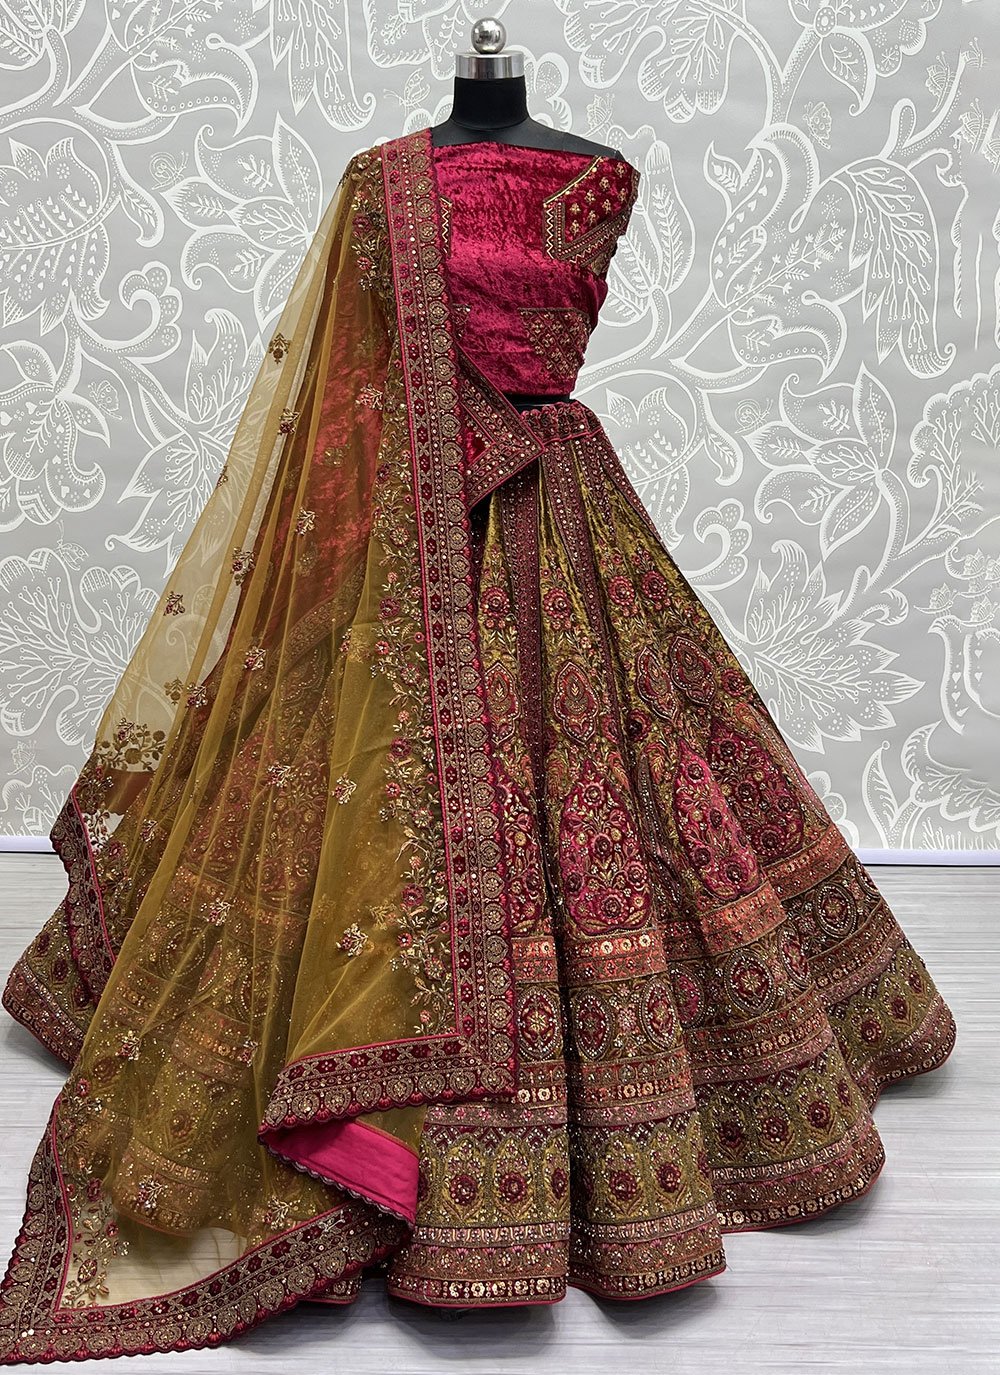 Bridal Wedding Indian Velvet Lehenga Choli Heavy Sabyasachi Lengha Chunri  Dress | eBay